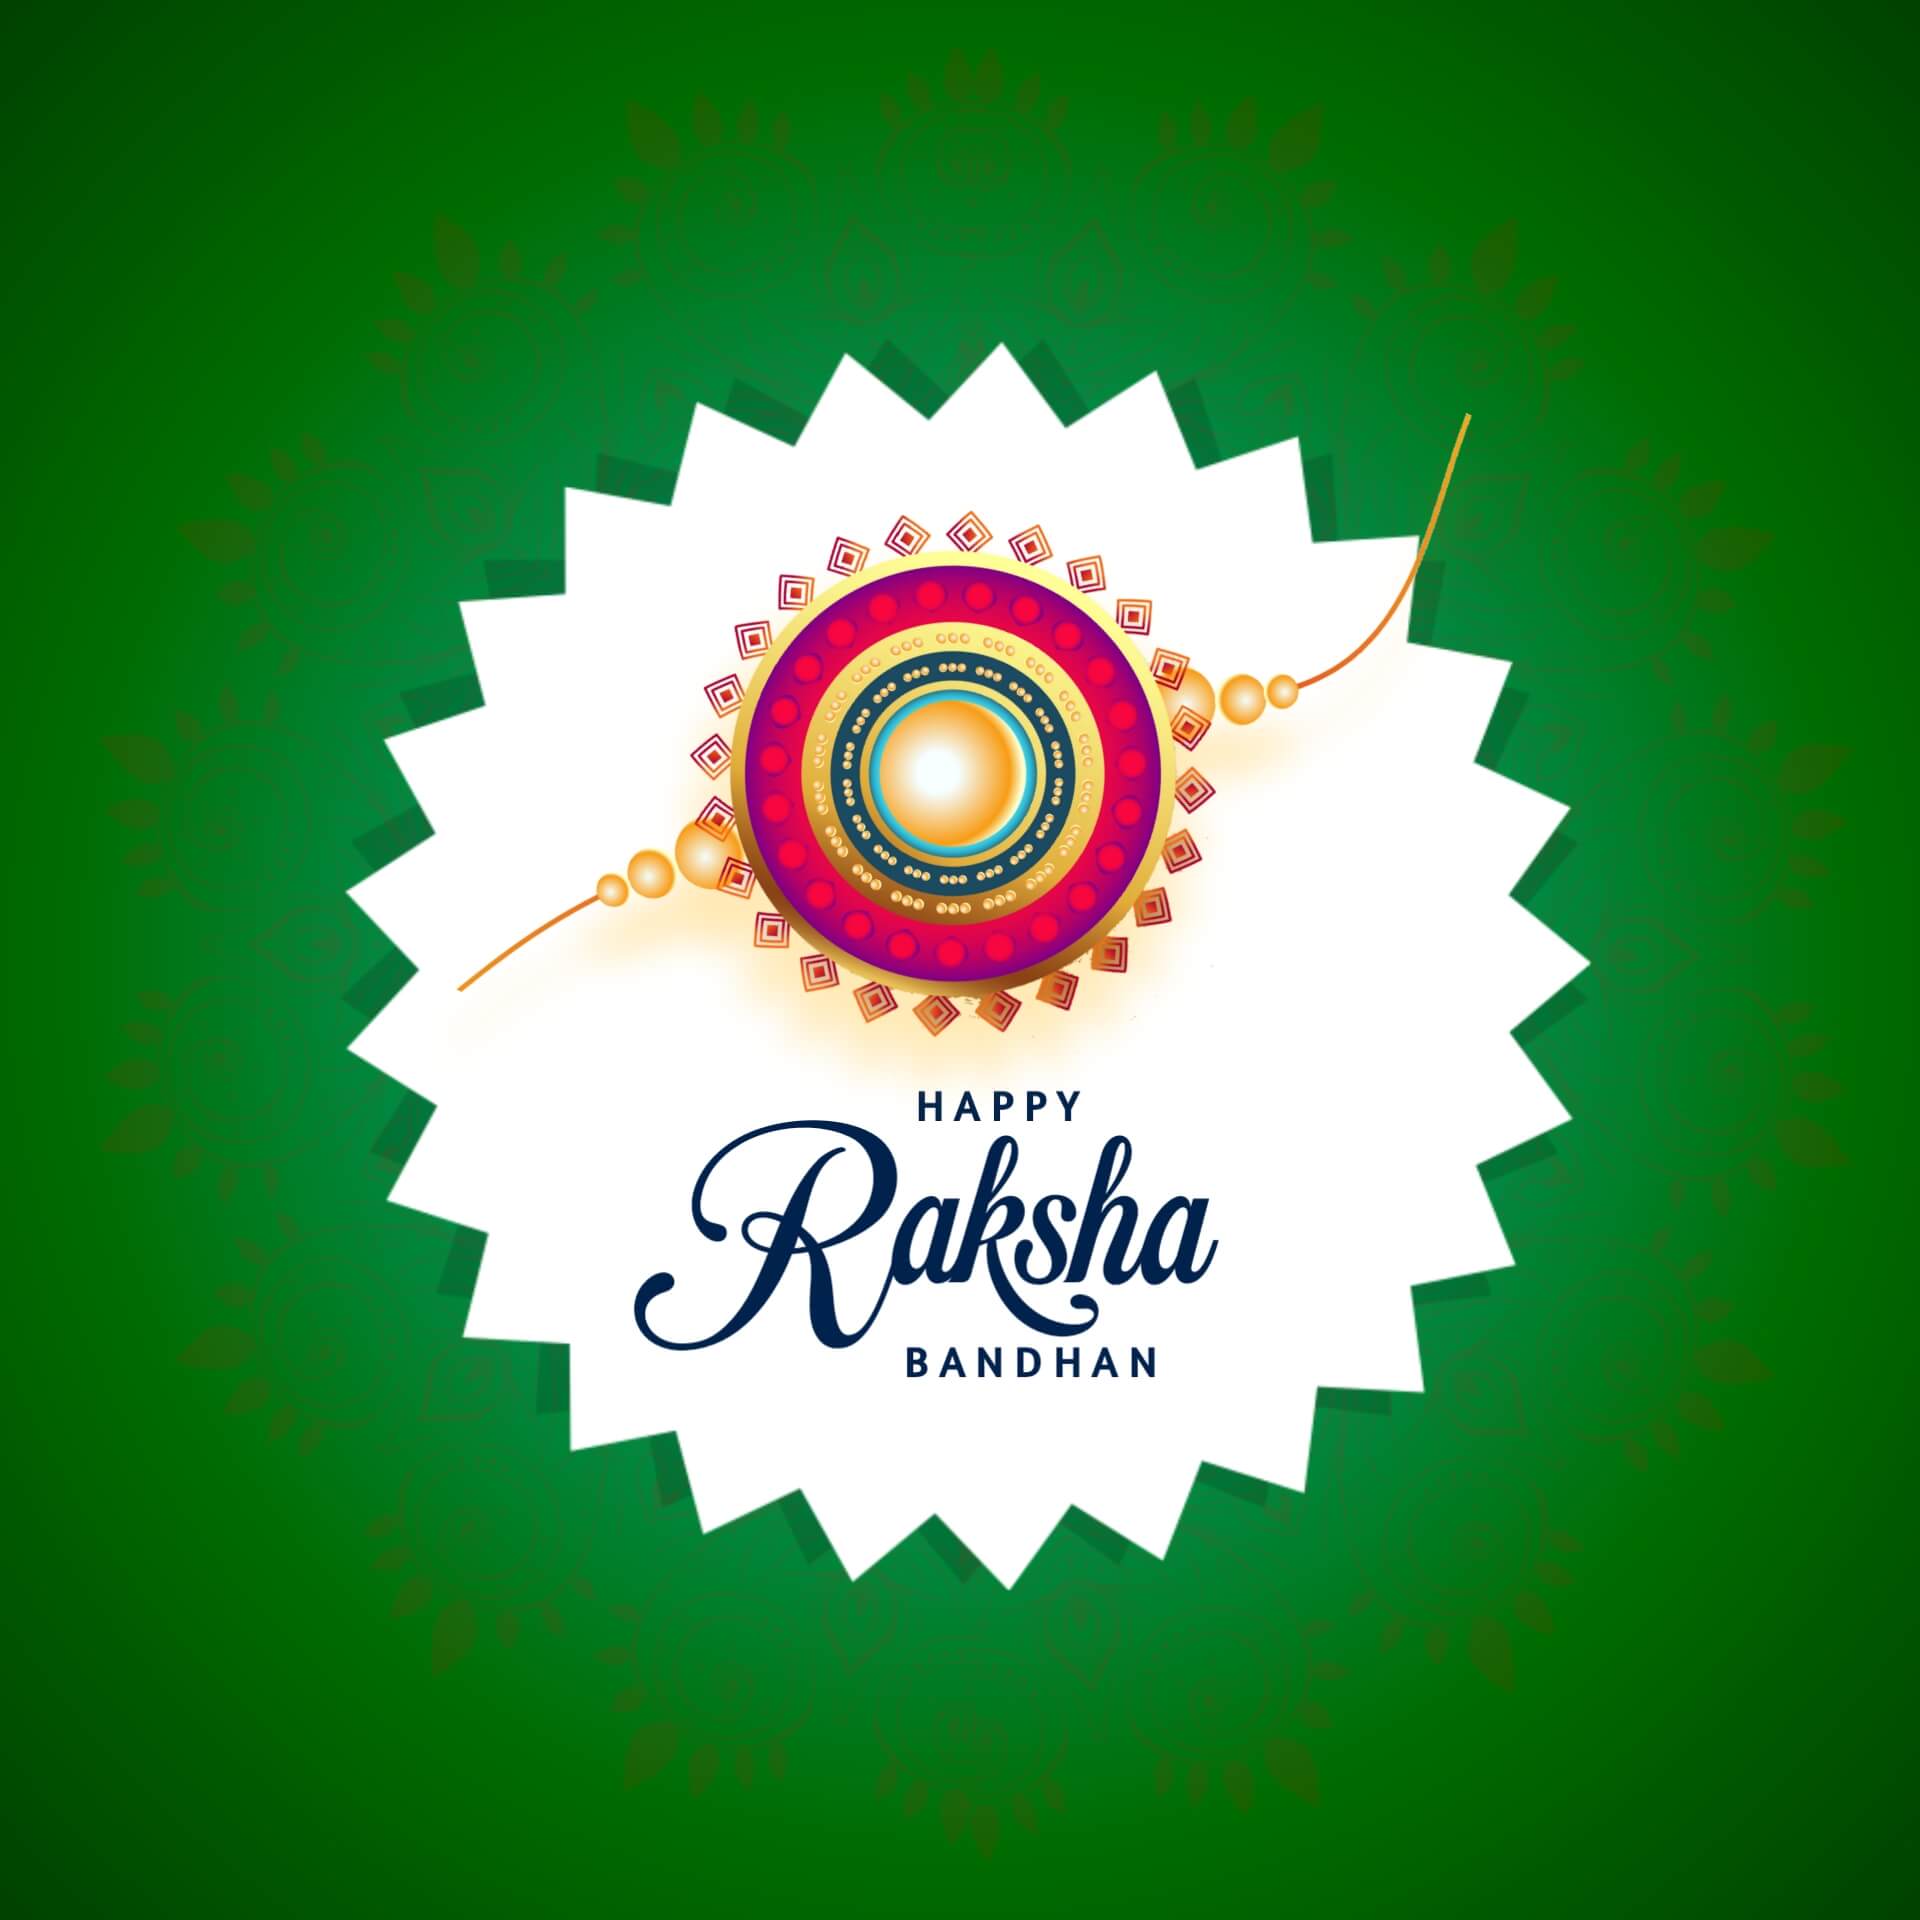 Happy Raksha Bandhan Image with Green Background